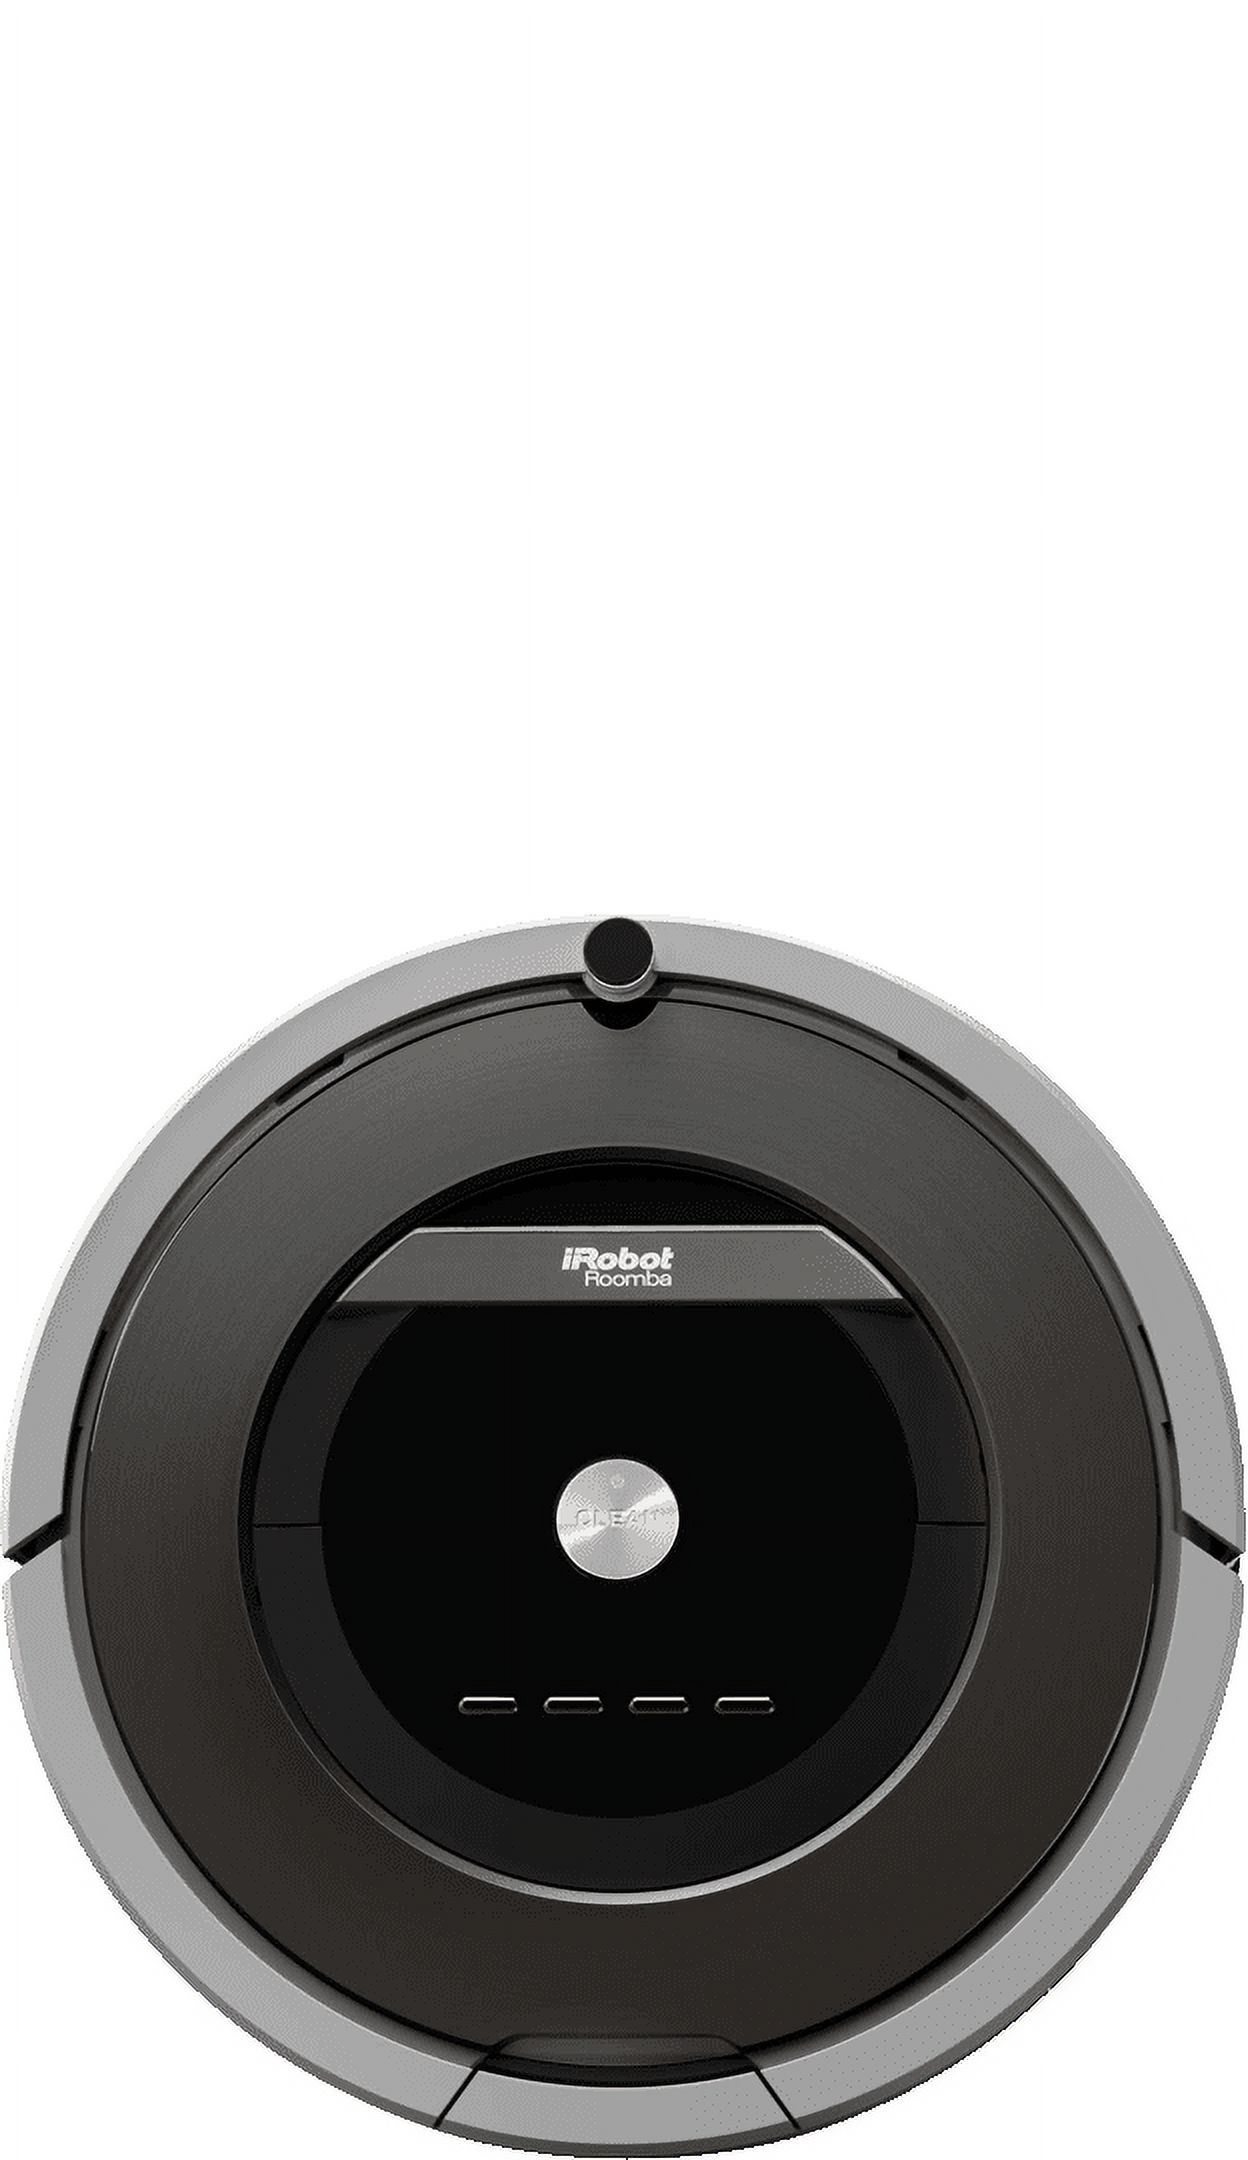 iRobot Roomba 880 Robot Vacuum with Manufacturer's Warranty - image 2 of 7